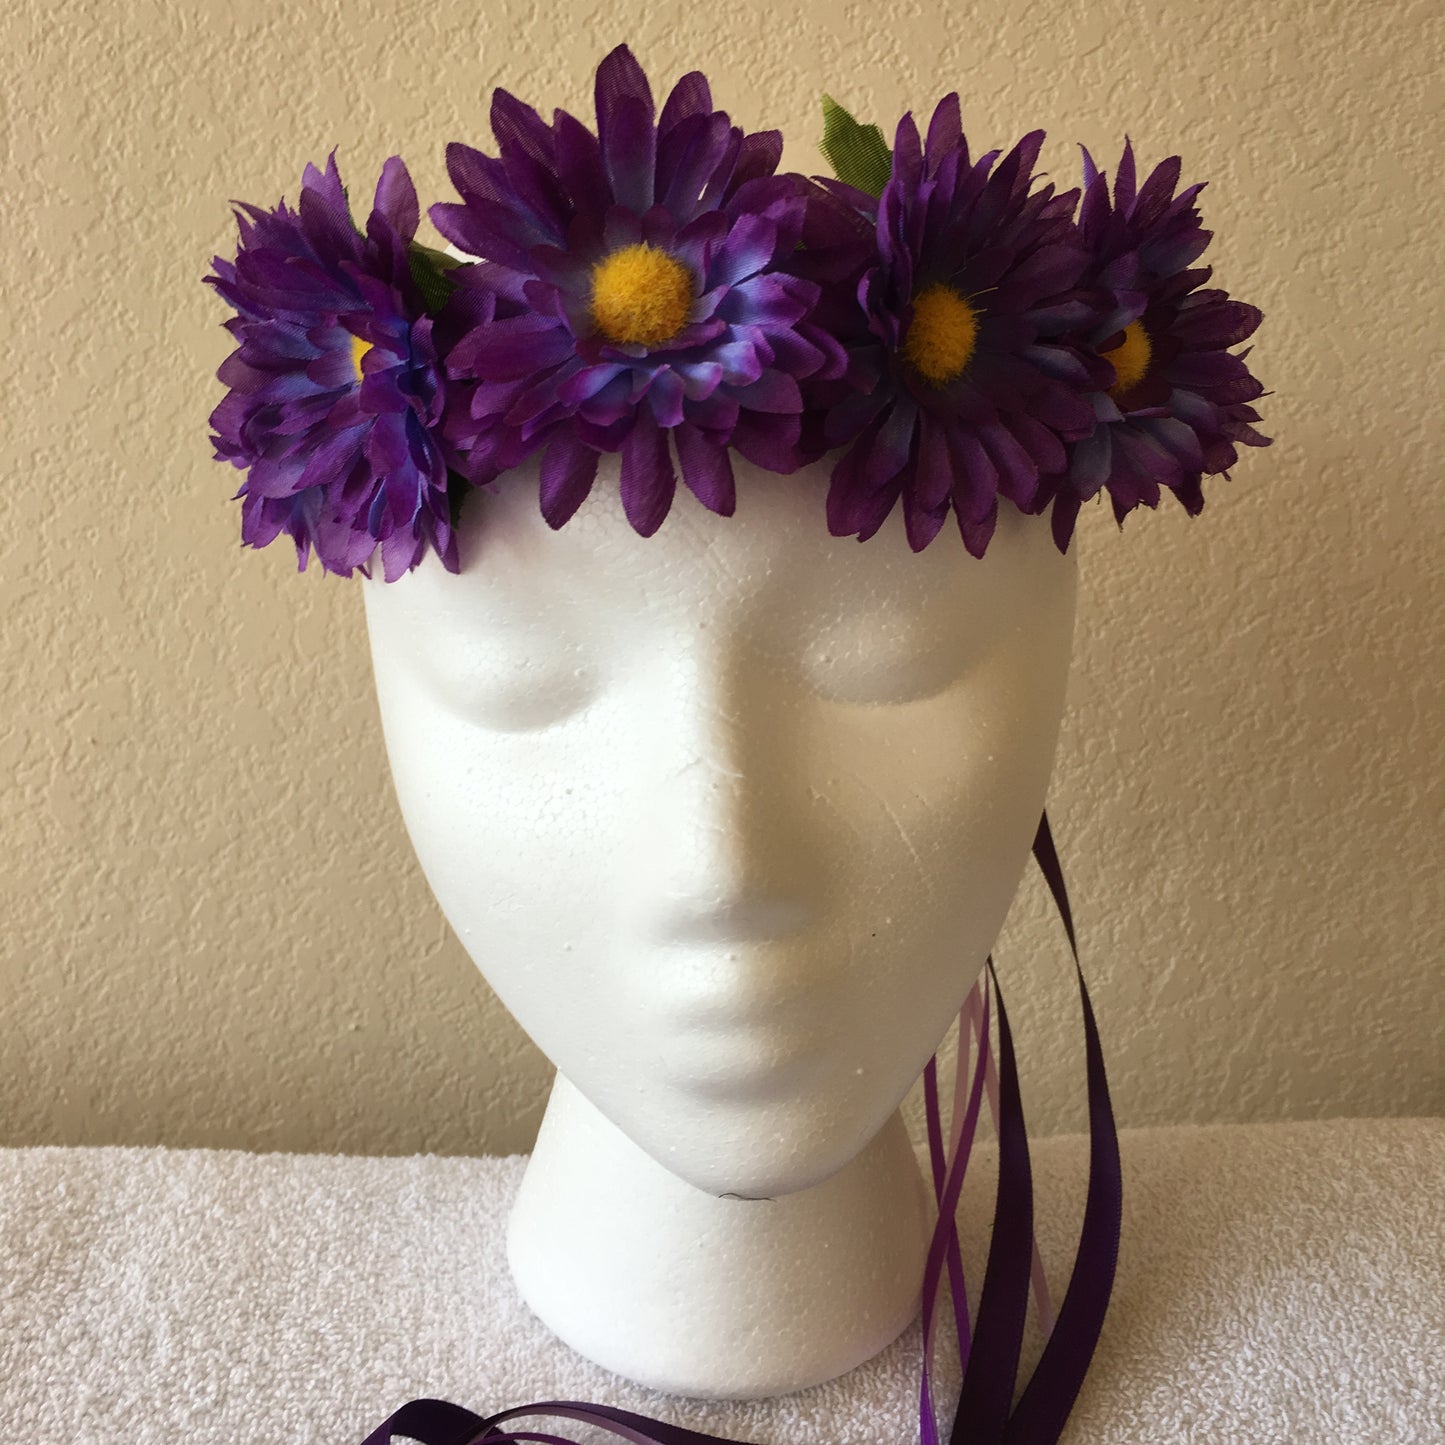 Small Wreath - Dark purple daisies